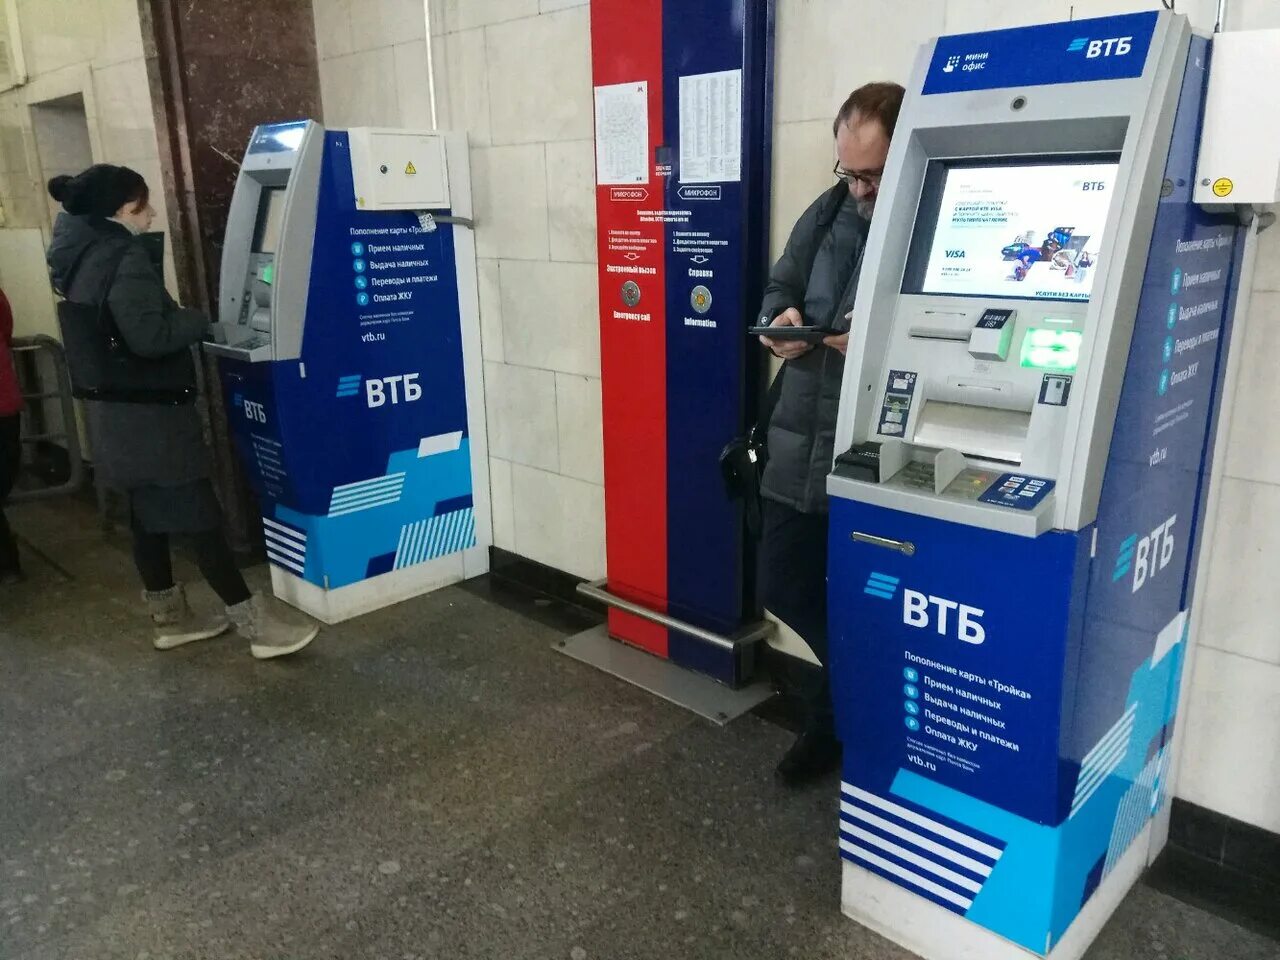 Банкомат сбп. Банкомат ВТБ. ВТБ банк терминал. ВТБ банк банкоматы. Банкомат в метро.